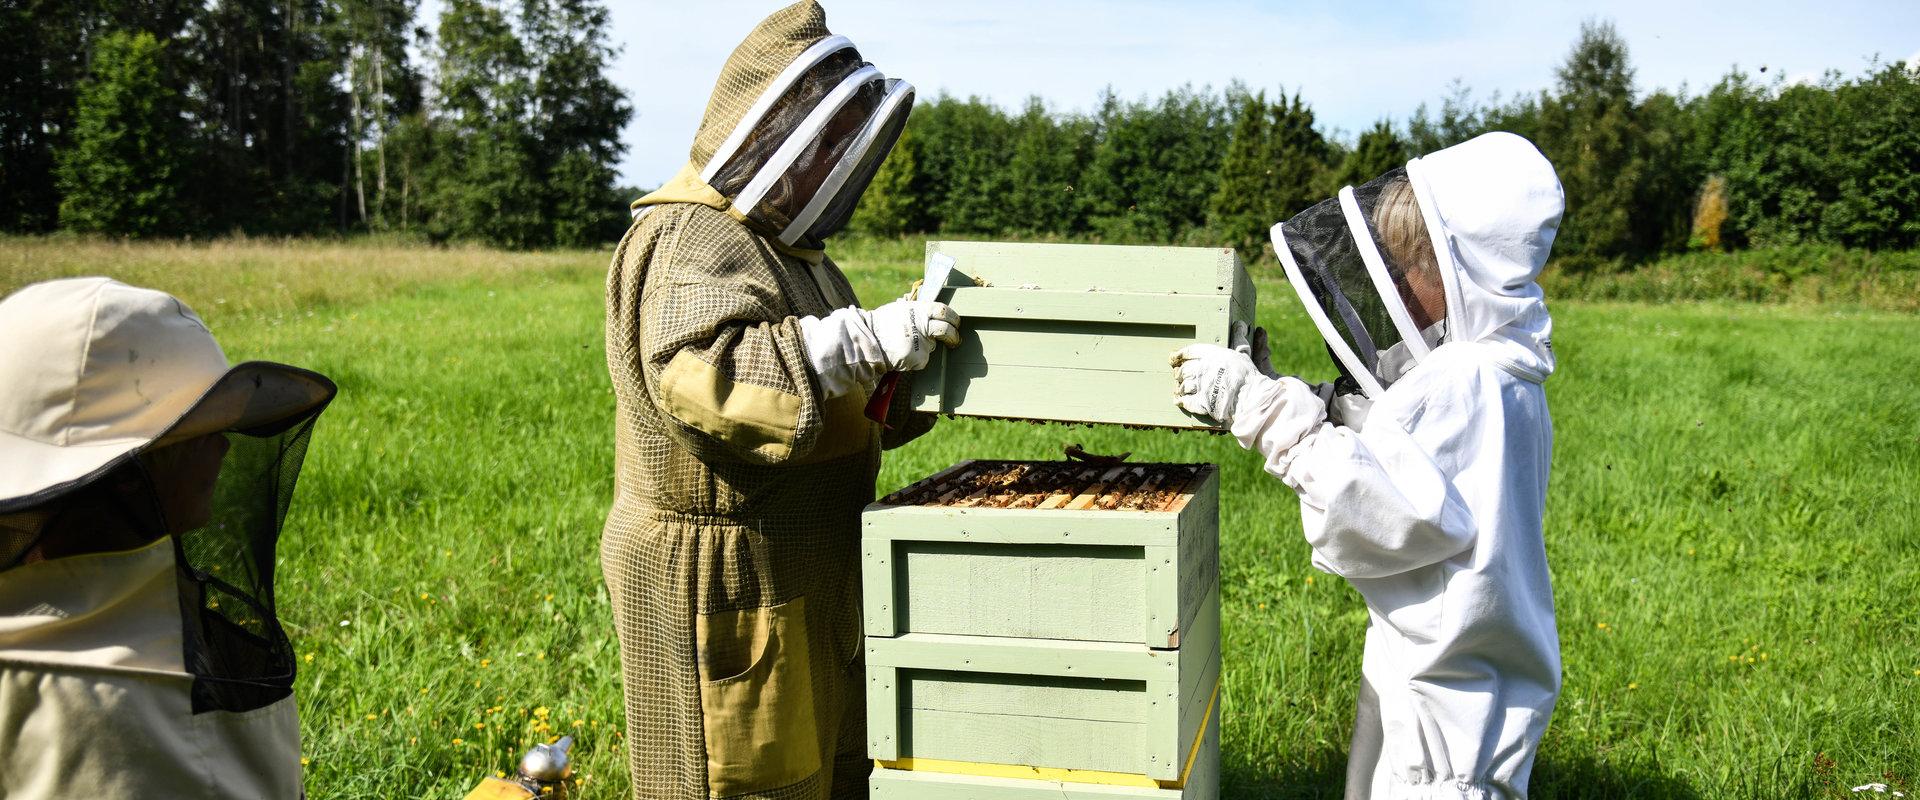 Slow moments during the apiary visit at Tormikadaka Farm